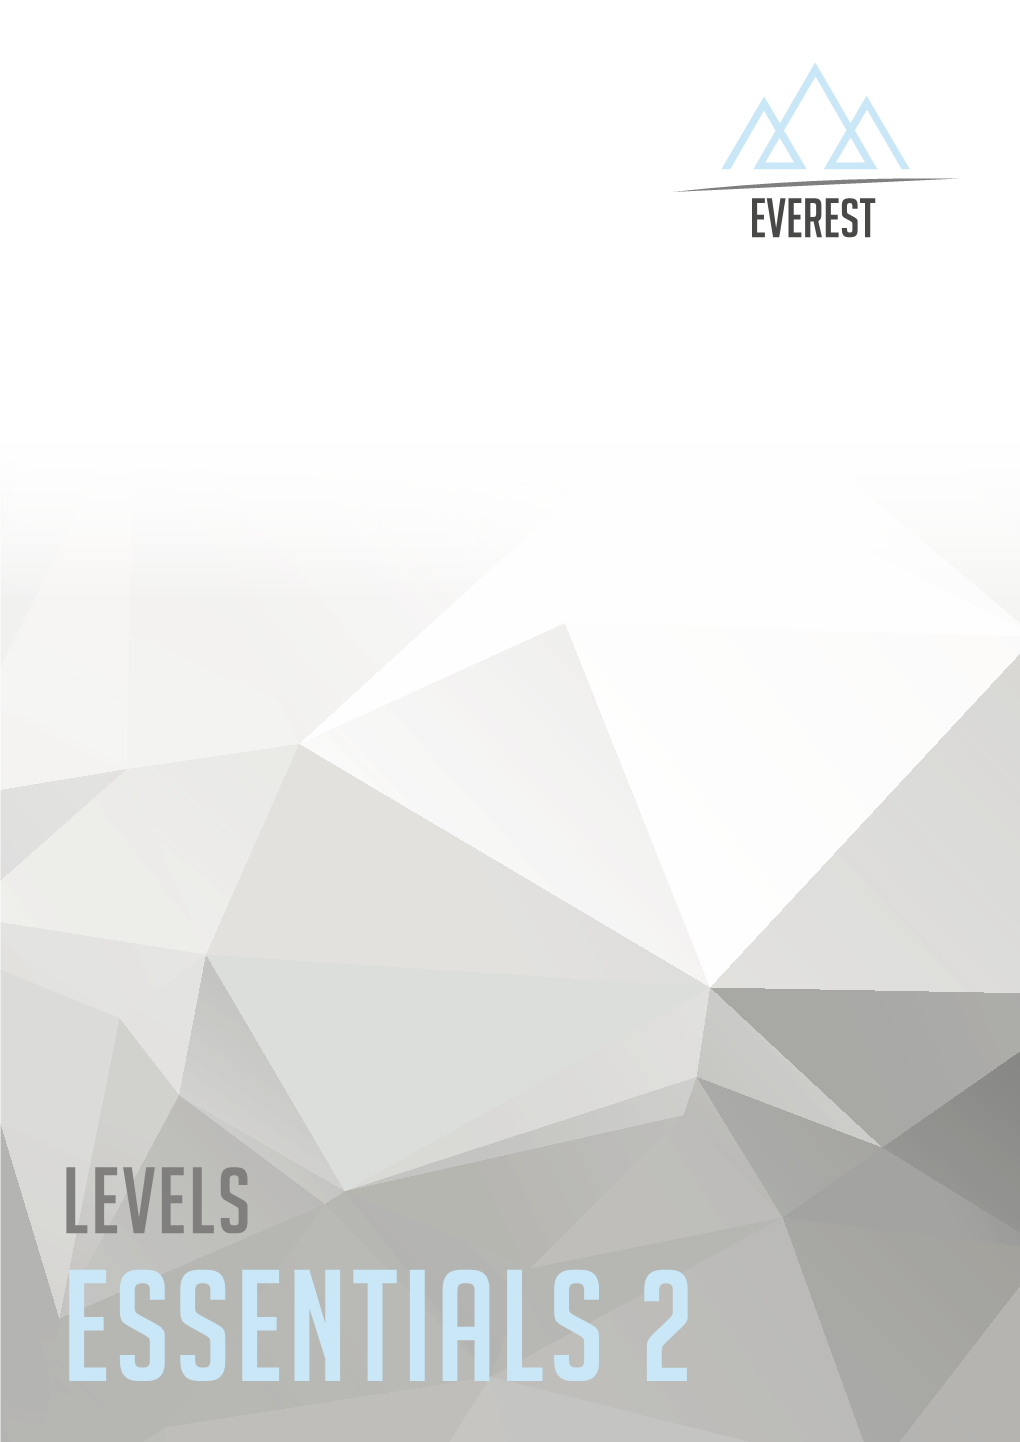 Levels Essentials 2 ESSENTIALS EVEREST EVEREST MINDFUL THAIBOXING CONTENTS